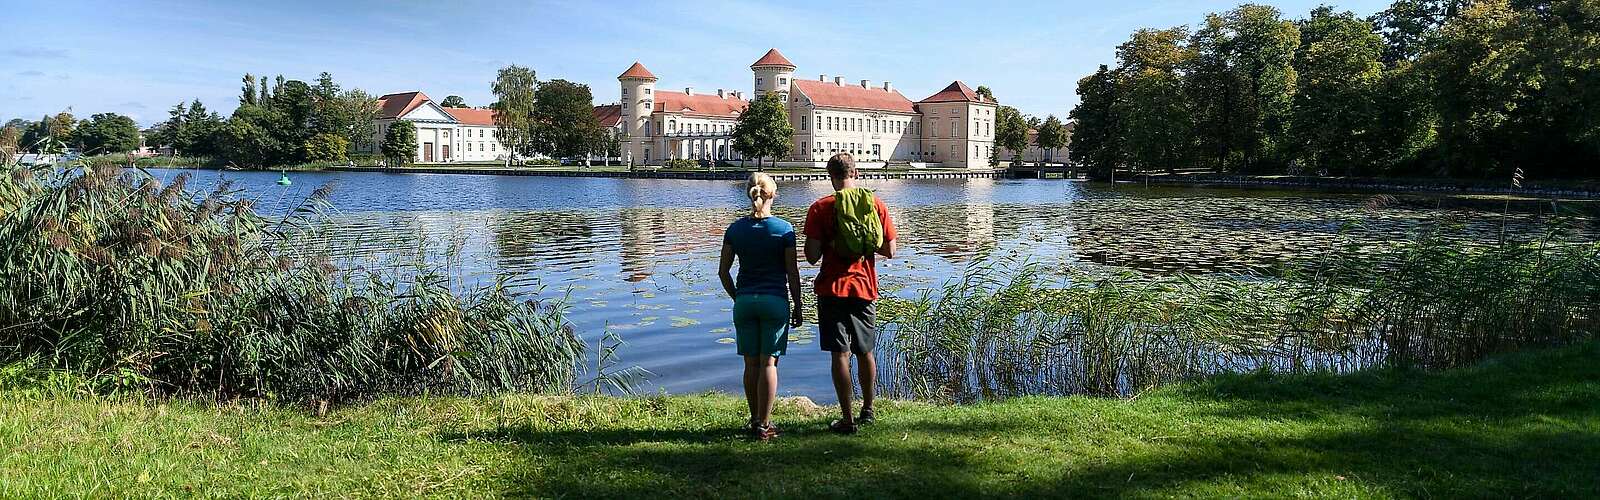 Besucher am Ufer des Grienericksees vor dem Schloss Rheinsberg,
        
    

        Foto: Fotograf / Lizenz - Media Import/Wolfgang Ehn